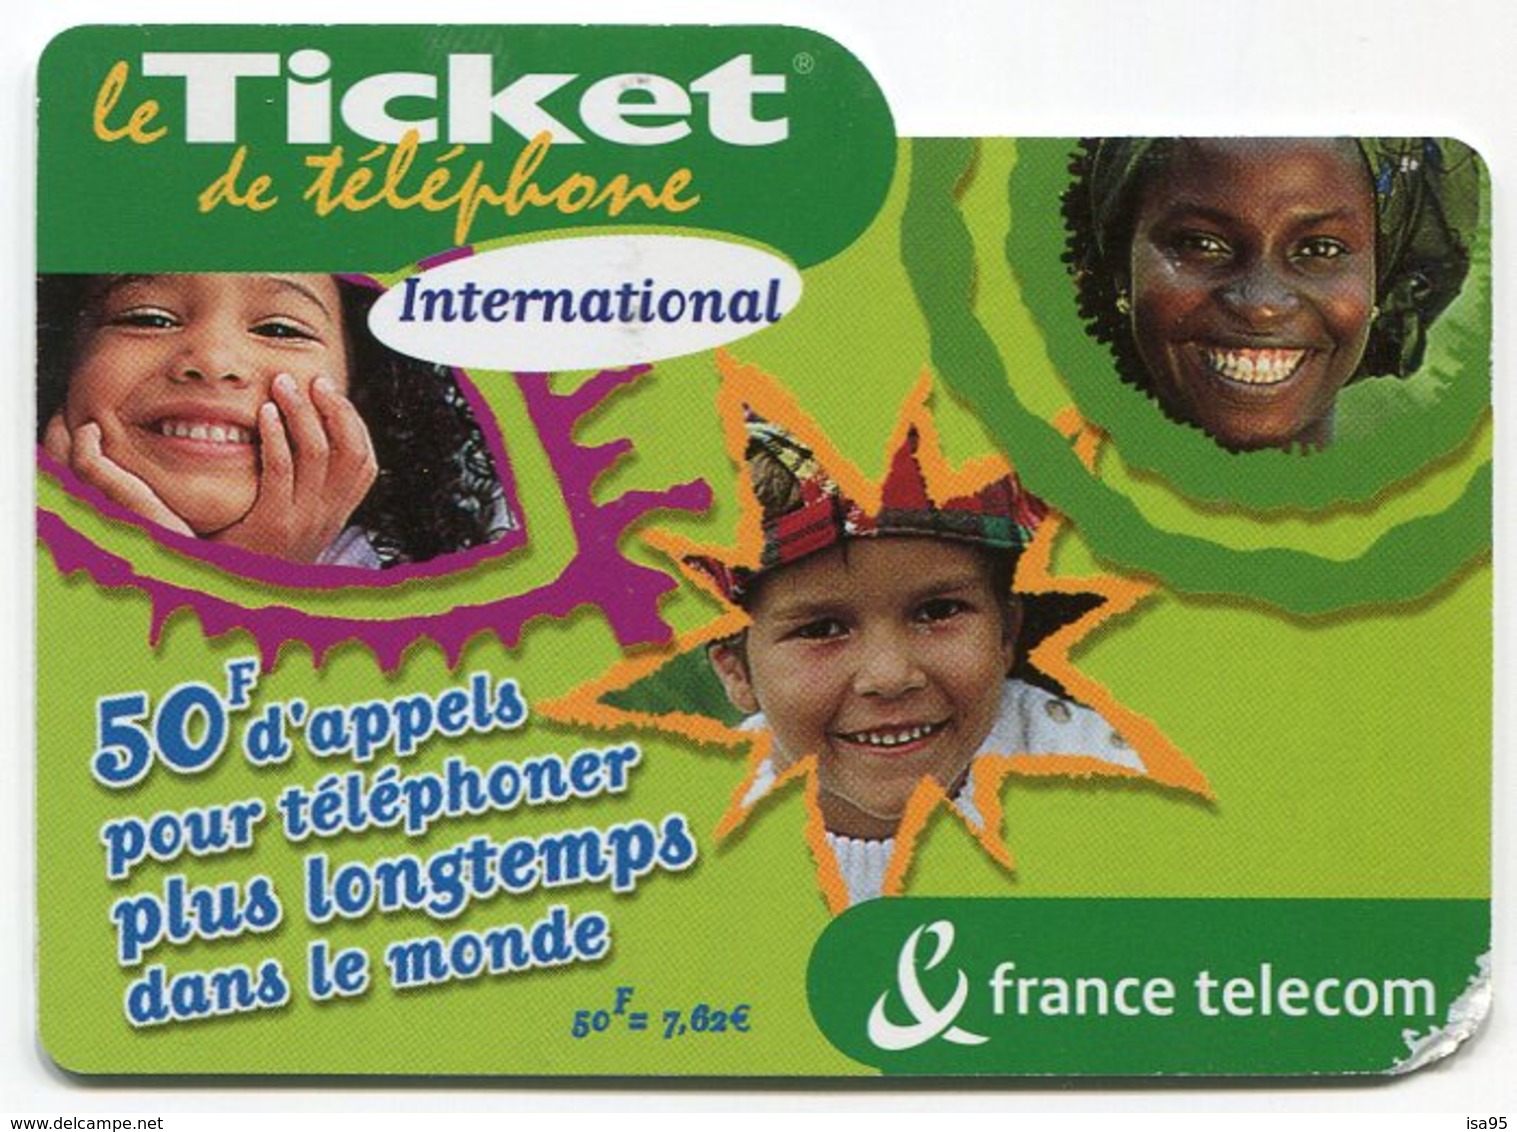 TELECARTE-LE TICKET DE TELEPHONE INTERNATIONAL-2003-50F - FT